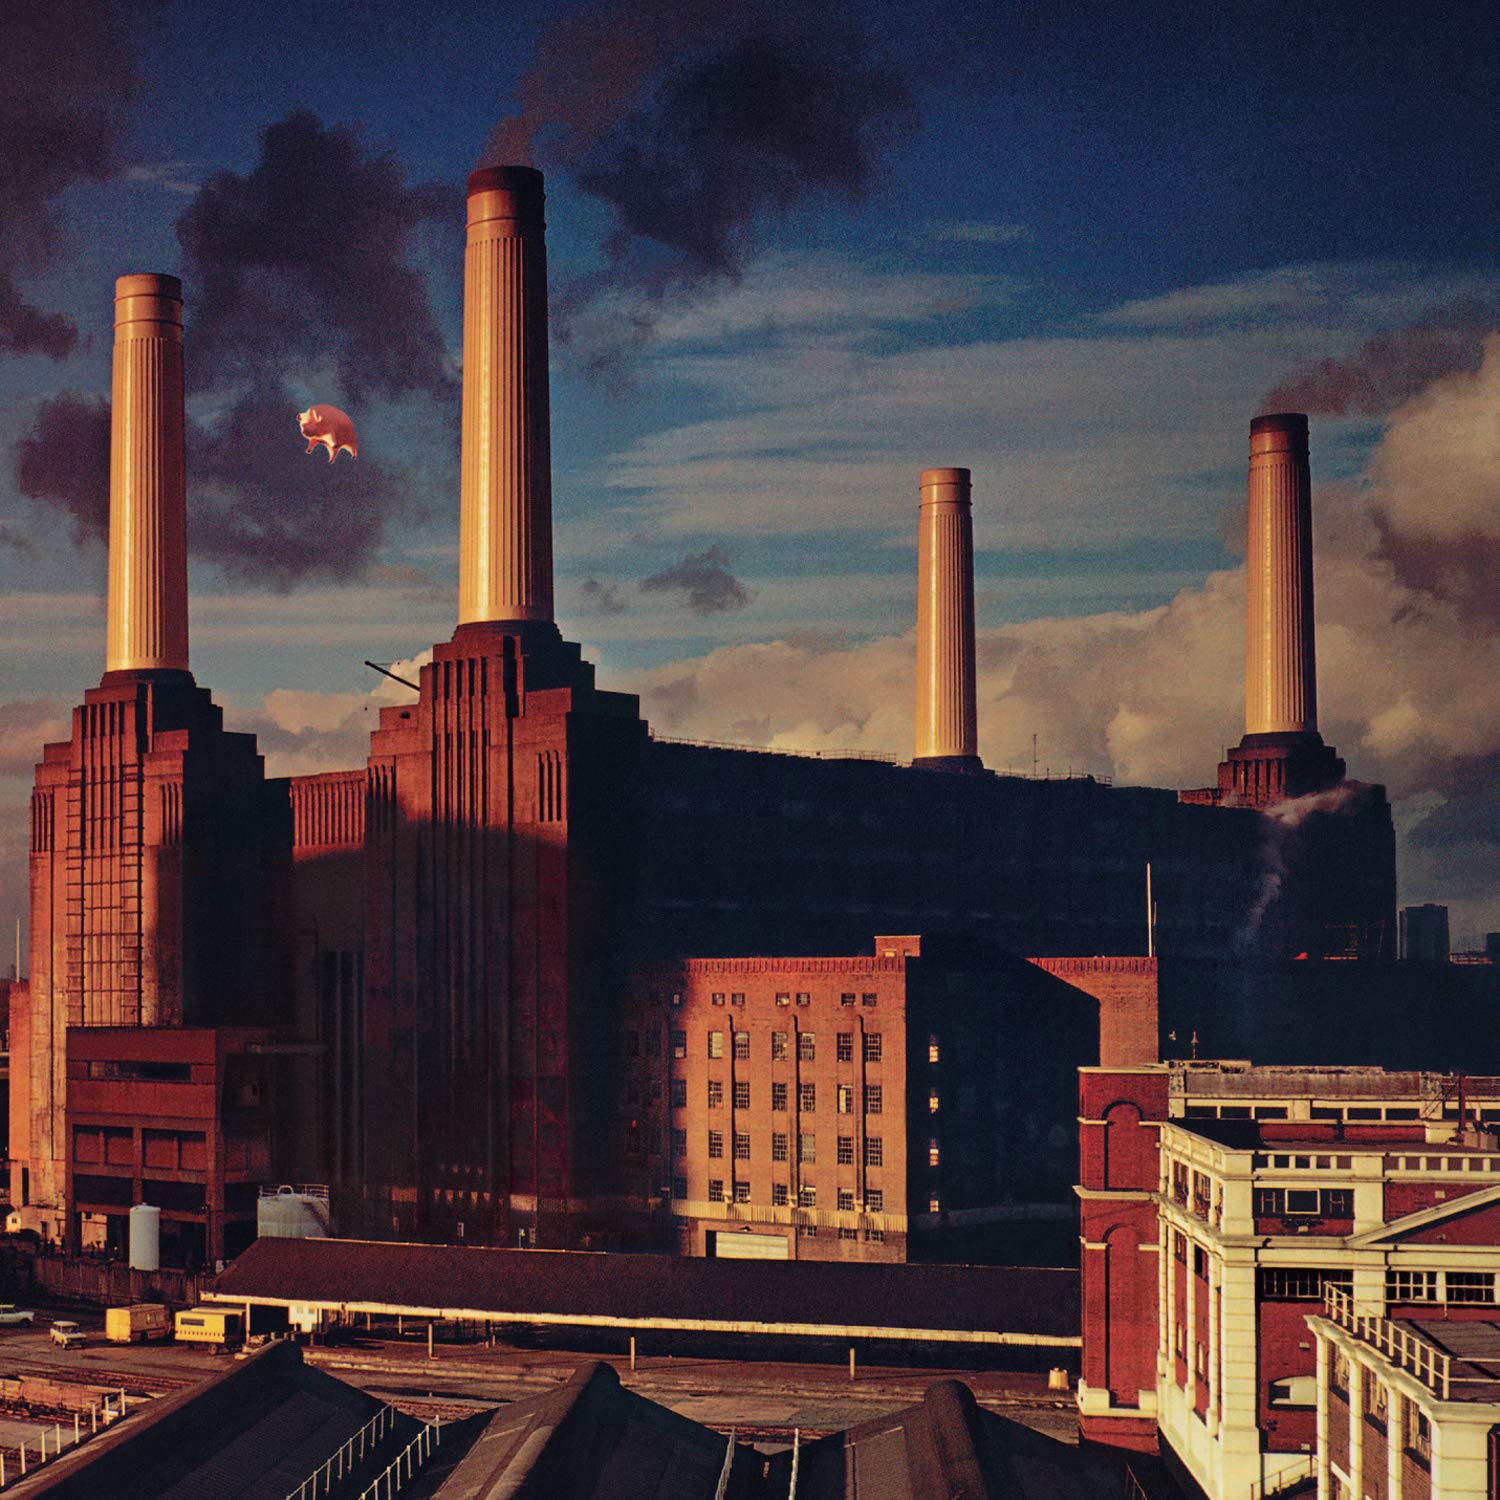 Pink Floyd ‎– Animals